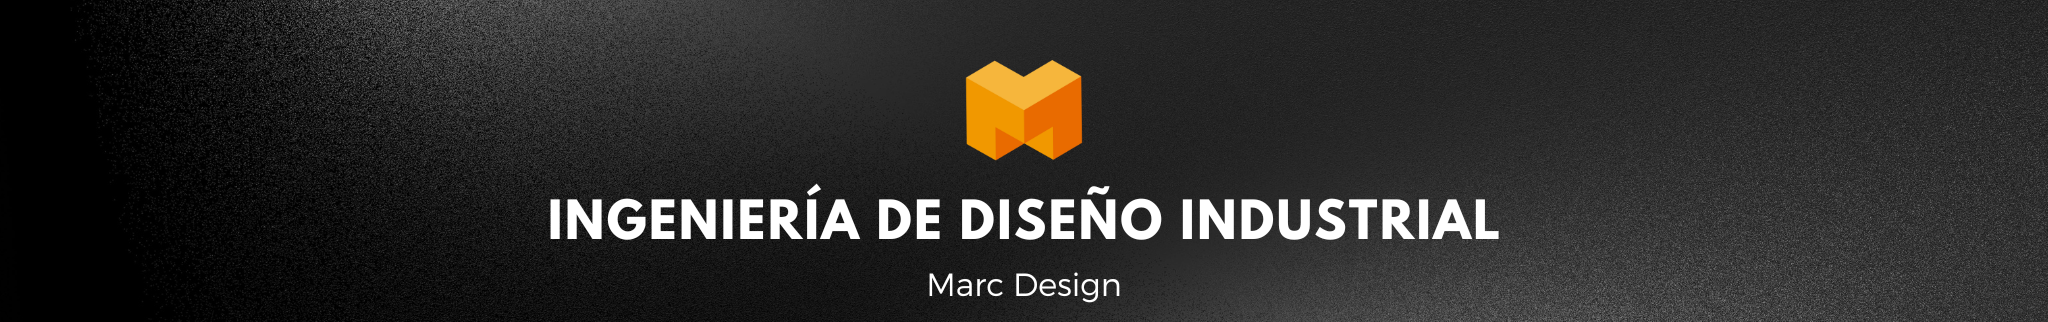 Marc Design のプロファイルバナー